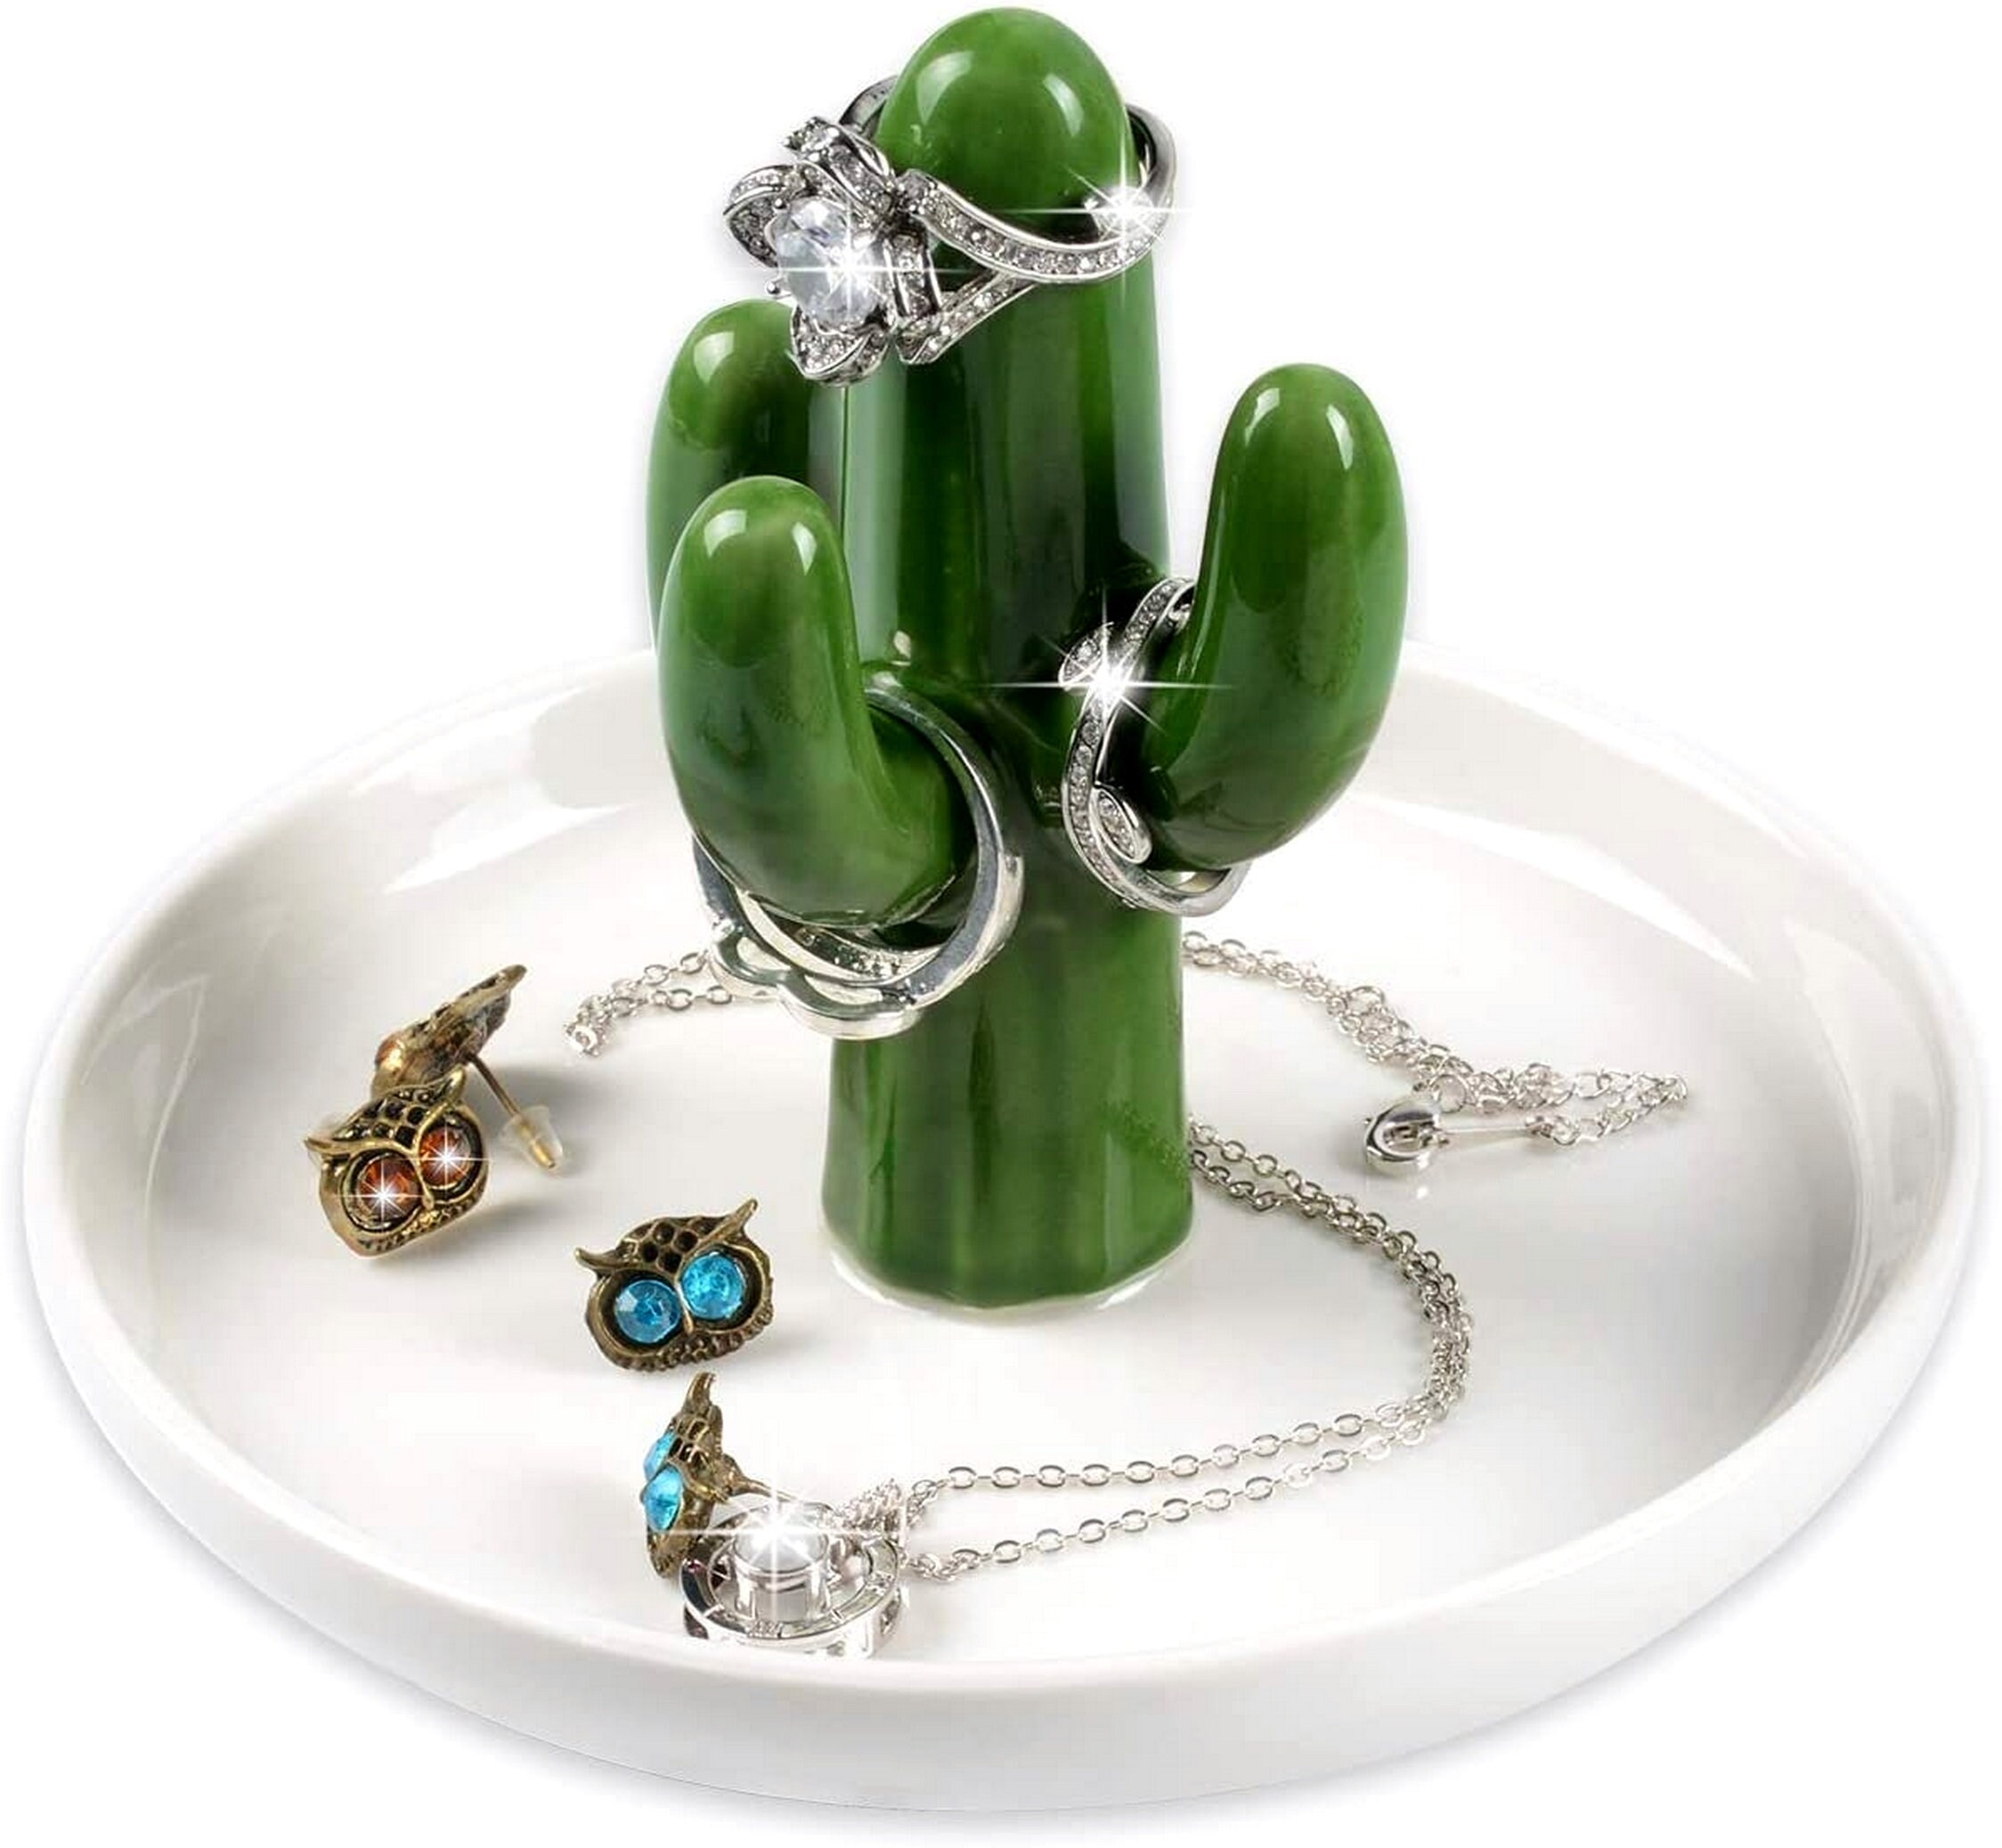 Cactus Earrings Necklace Ring Pendant Bracelet Jewelry Display Stand Tray  Tree Storage Racks Organizer Holder Ceramic Ornaments